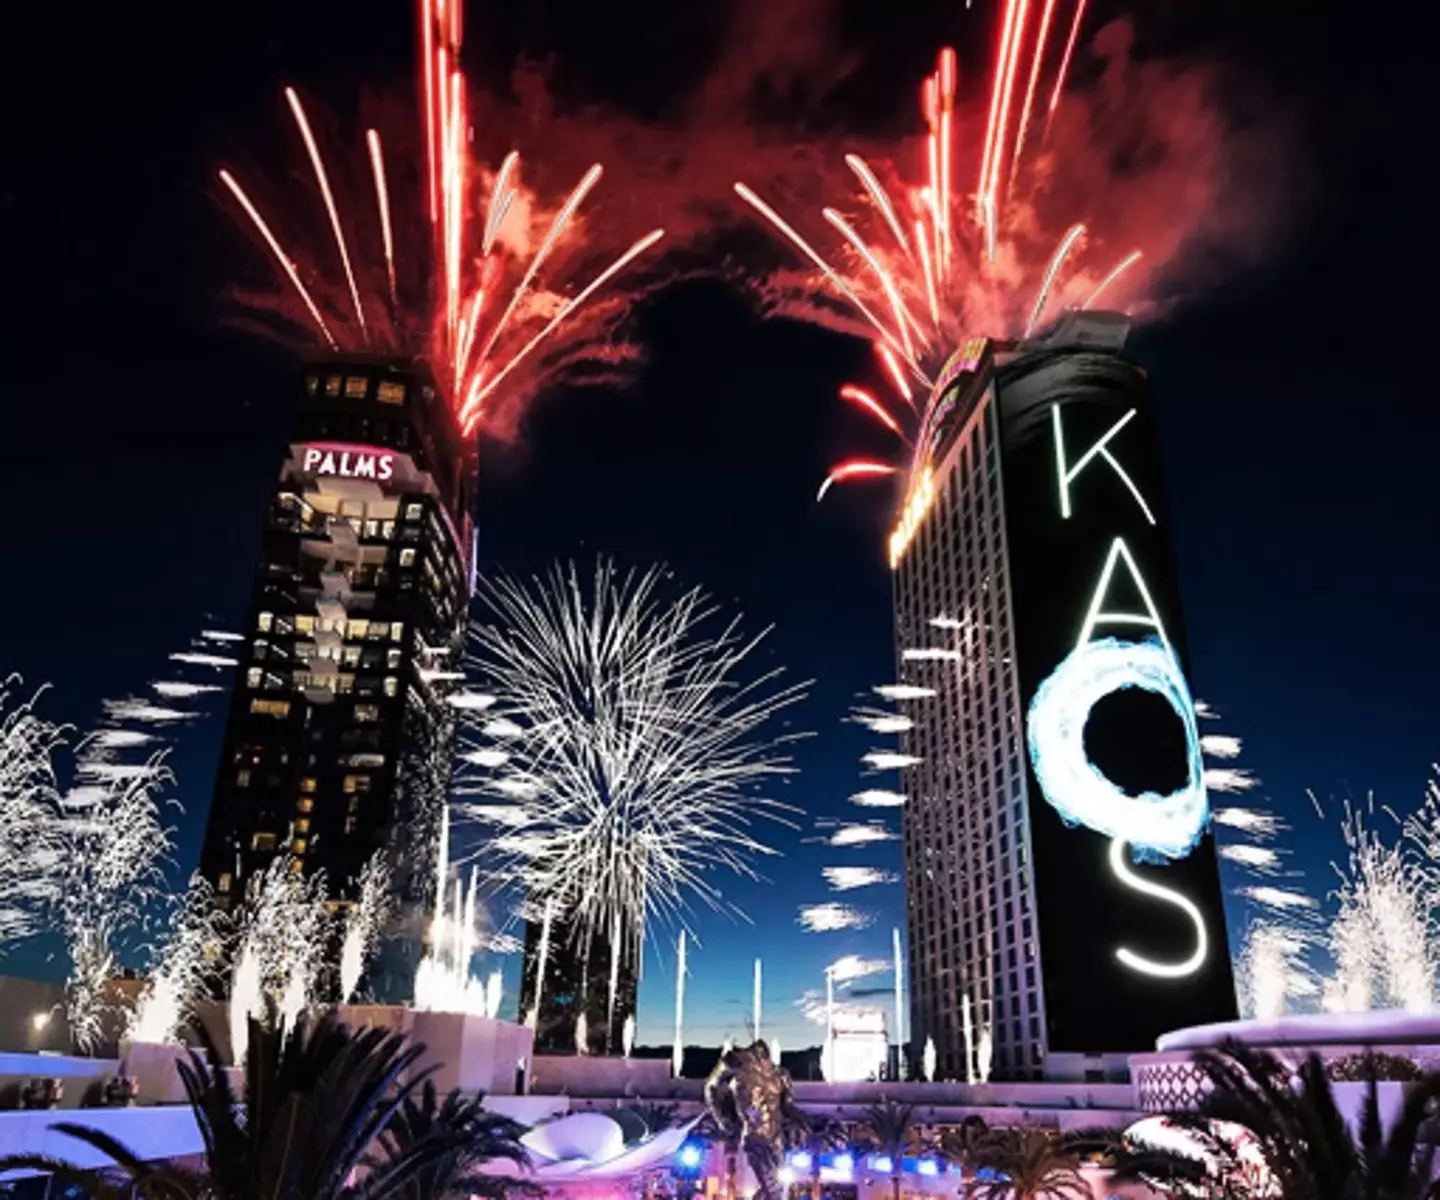 The event takes place at the KAOS inside Palms Casino Resort Las Vegas.